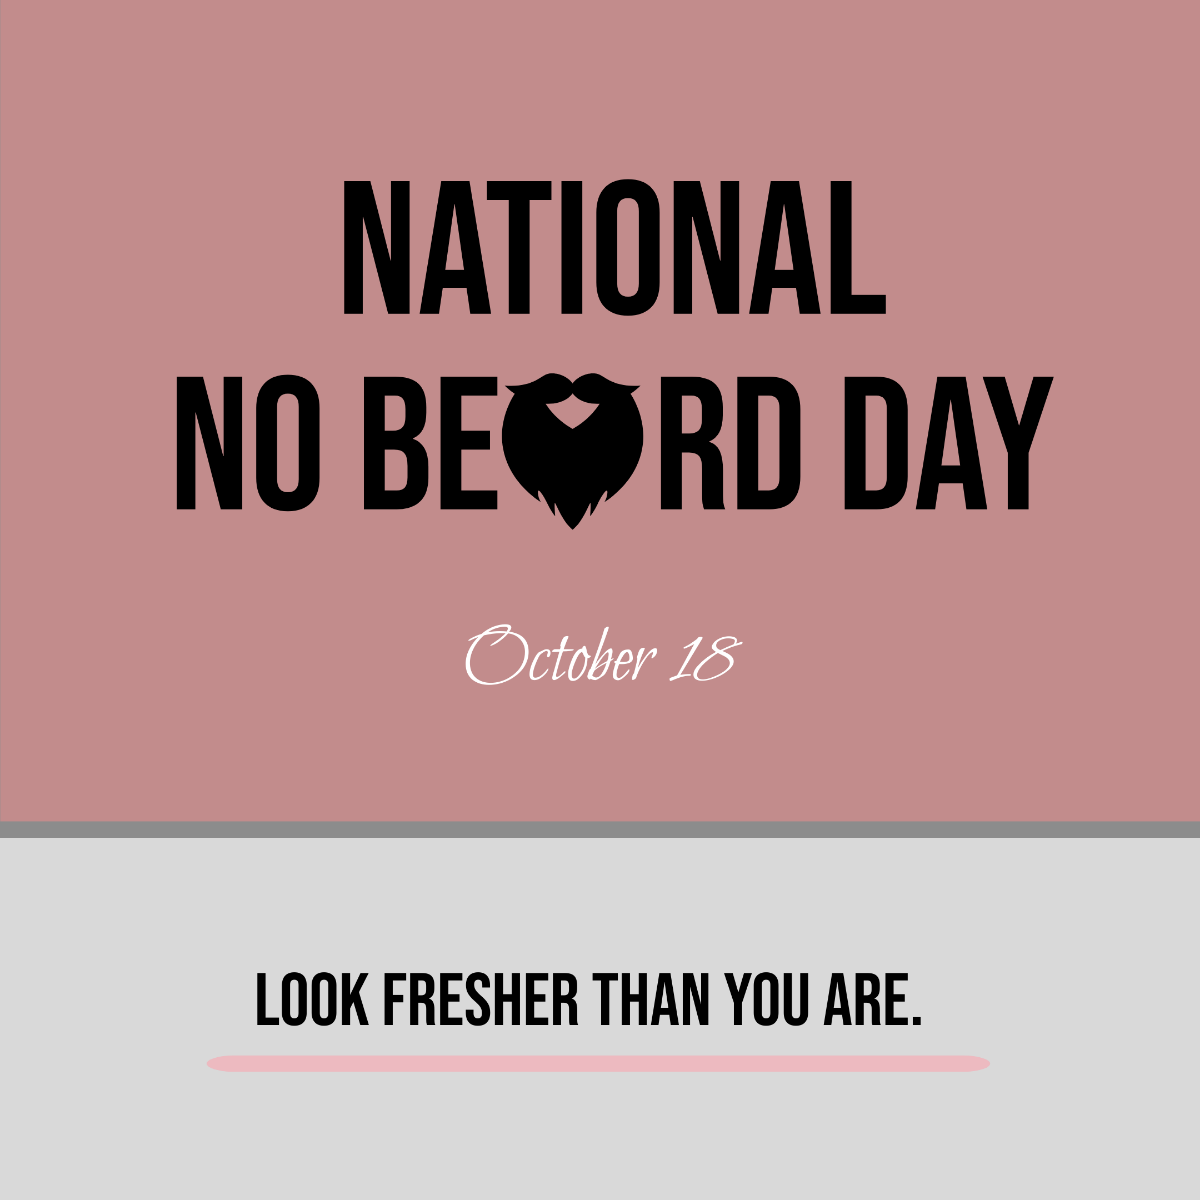 National No Beard Day FB Post